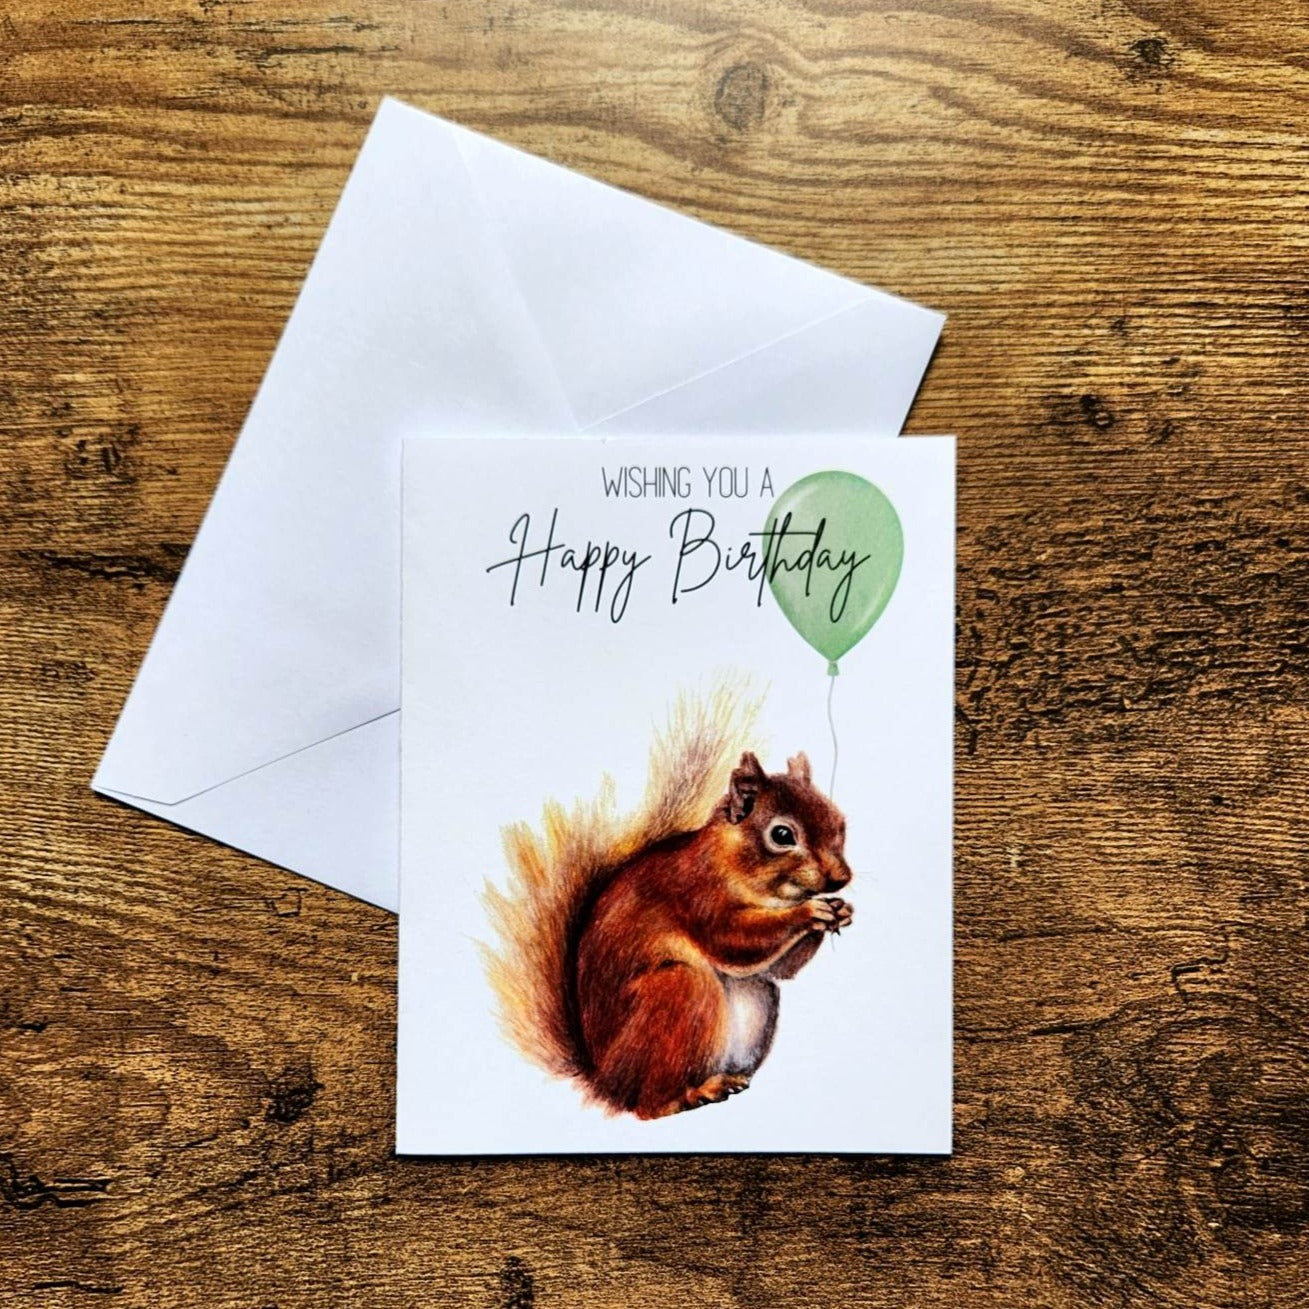 Squirrel with balloon birthday card, Happy Birthday card, Kids woodland animal card, Child birthday card, Party animal card, Partner card